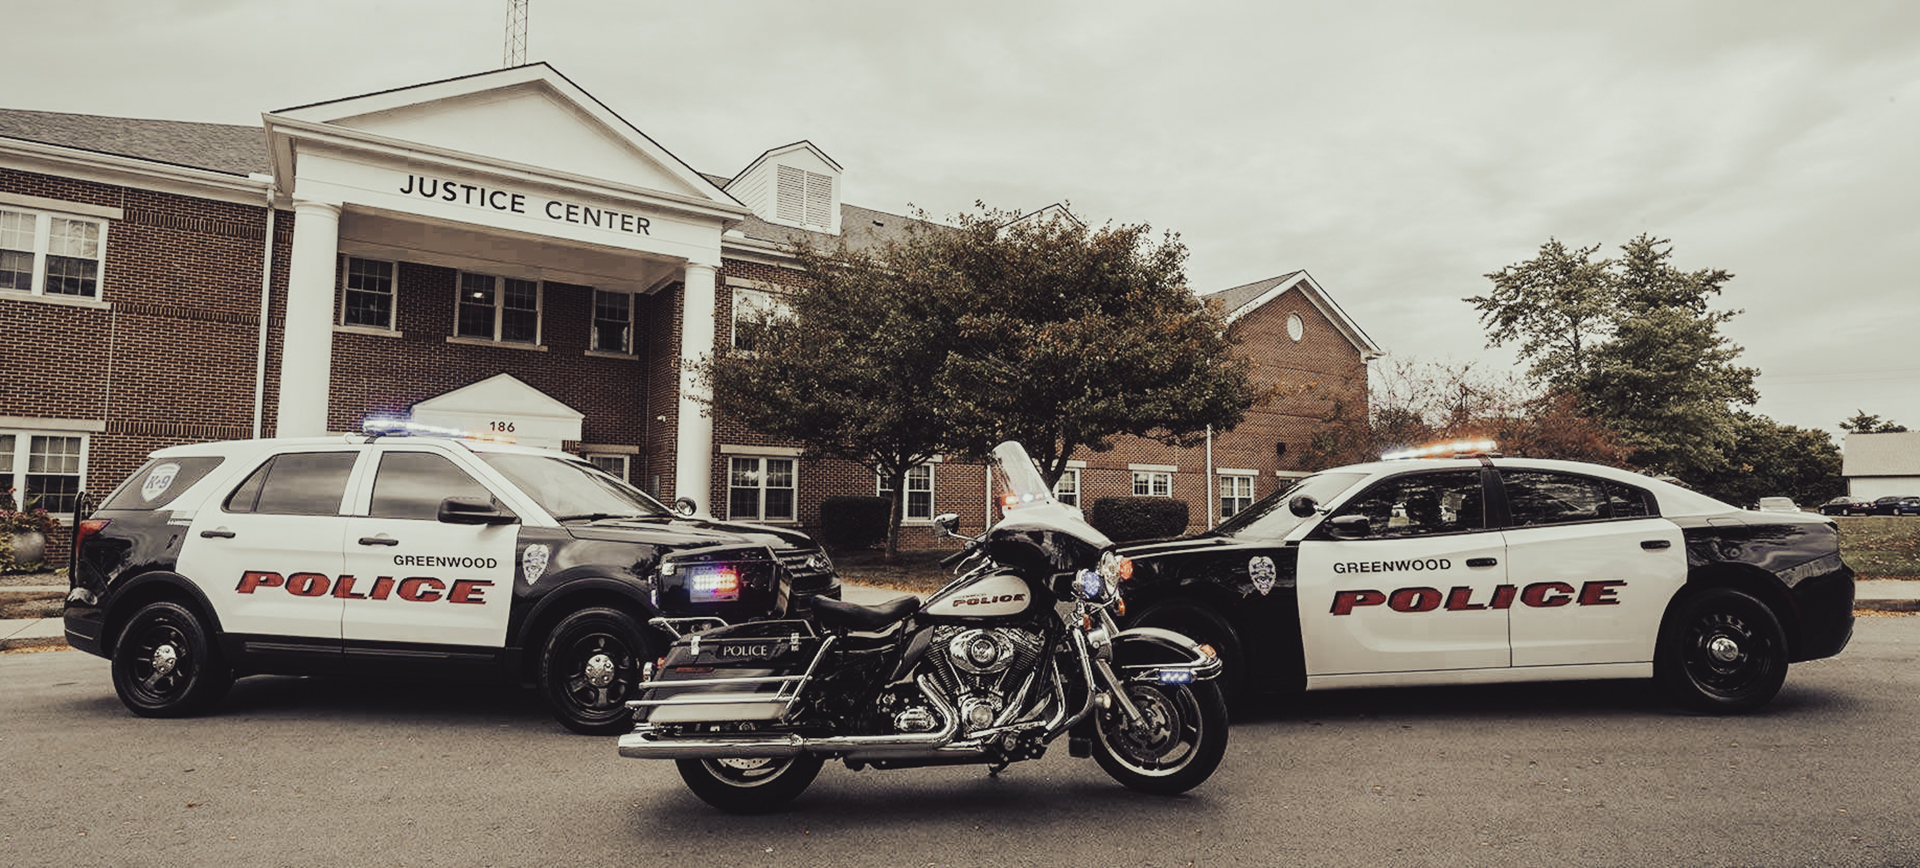 Photo of Greenwood Police Vehicles